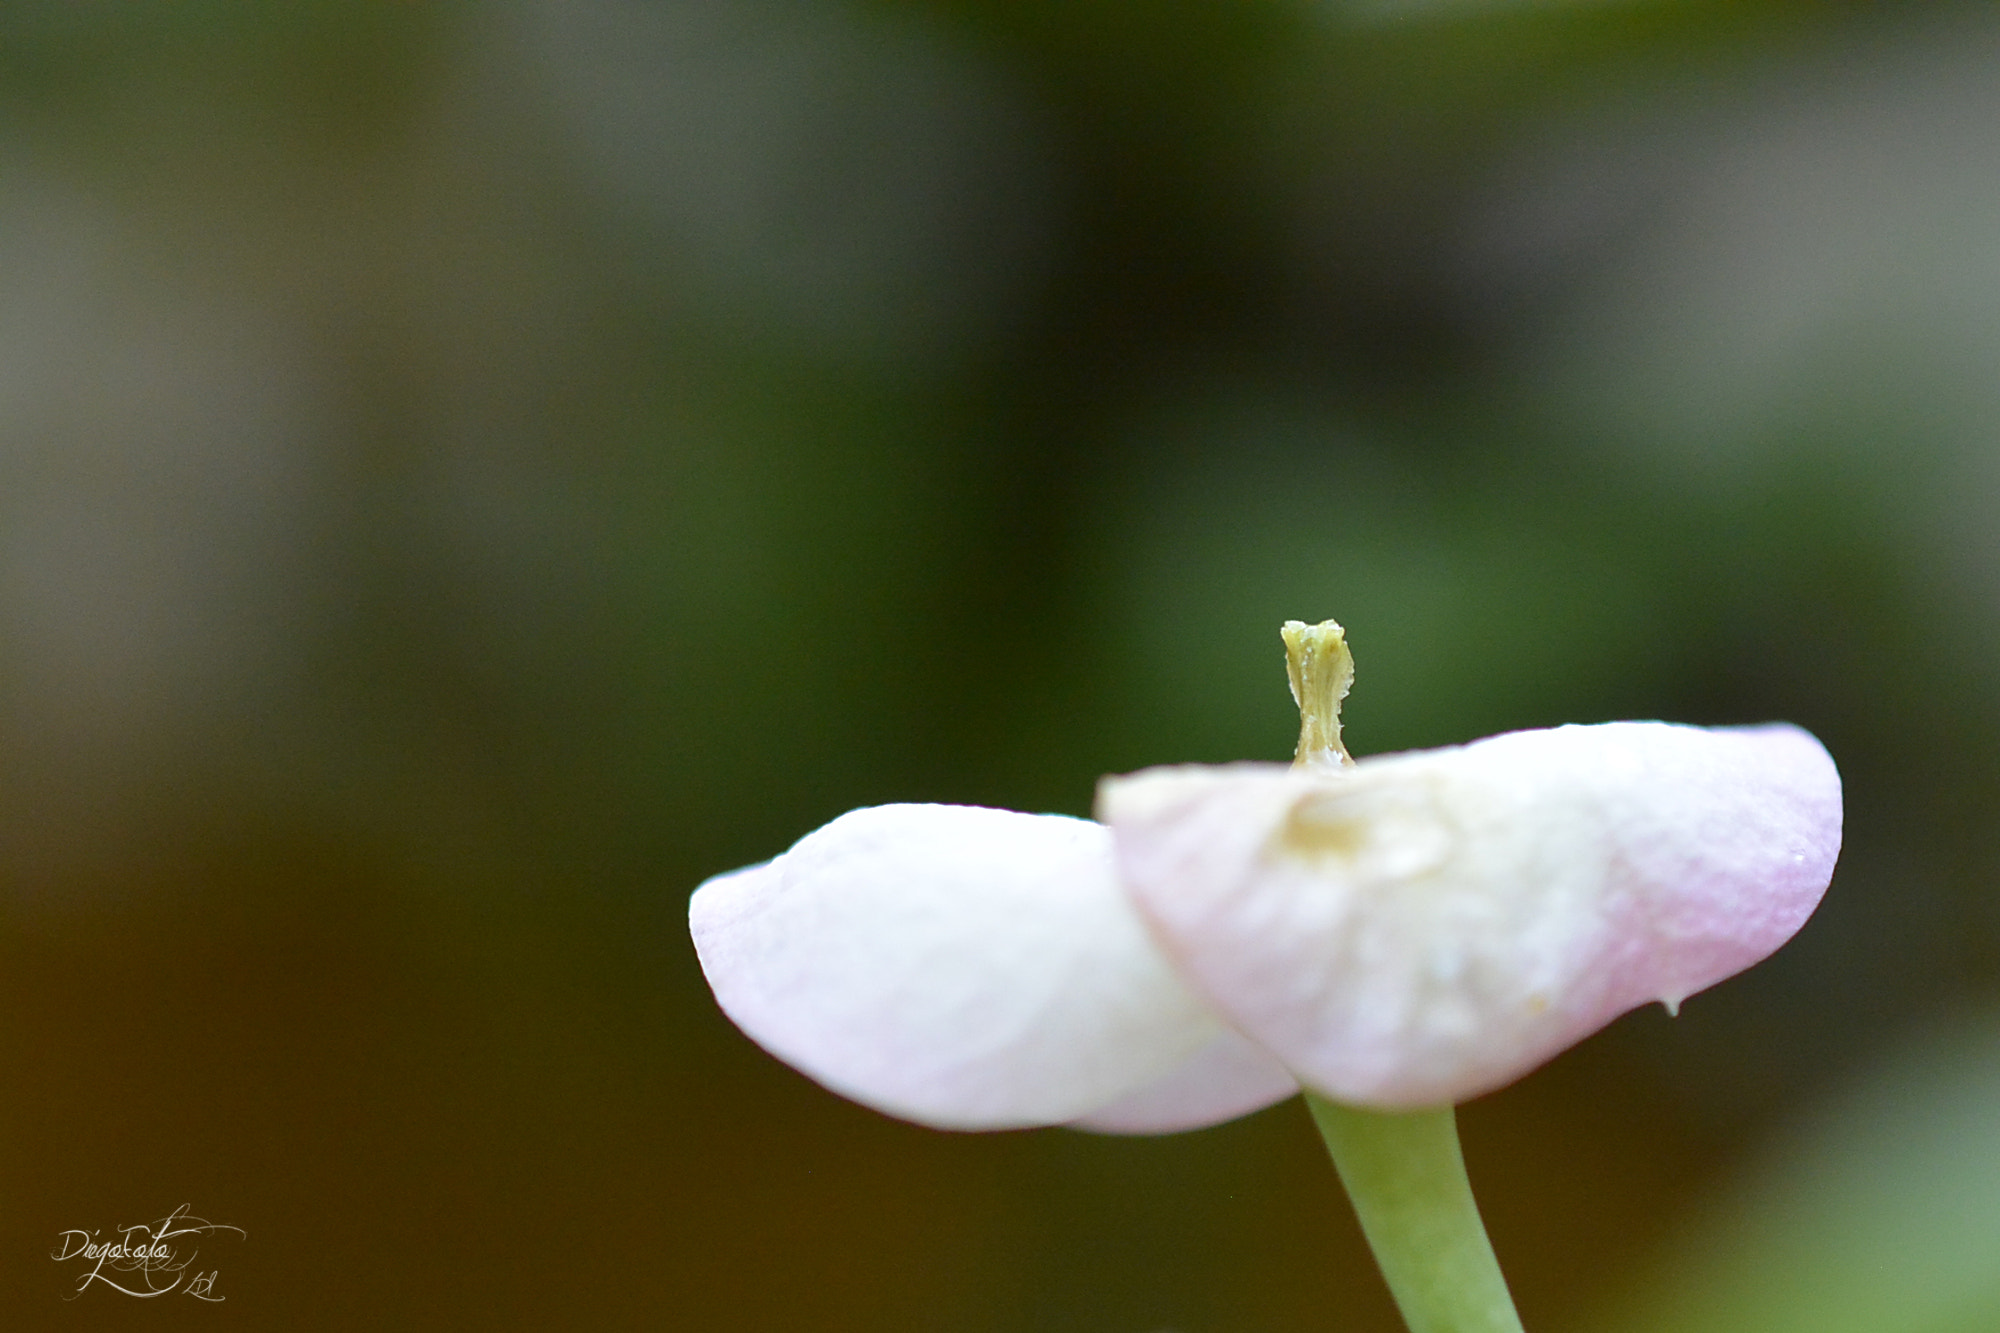 40mm f/2.8G sample photo. Euphorbia milii o corona de cristo photography